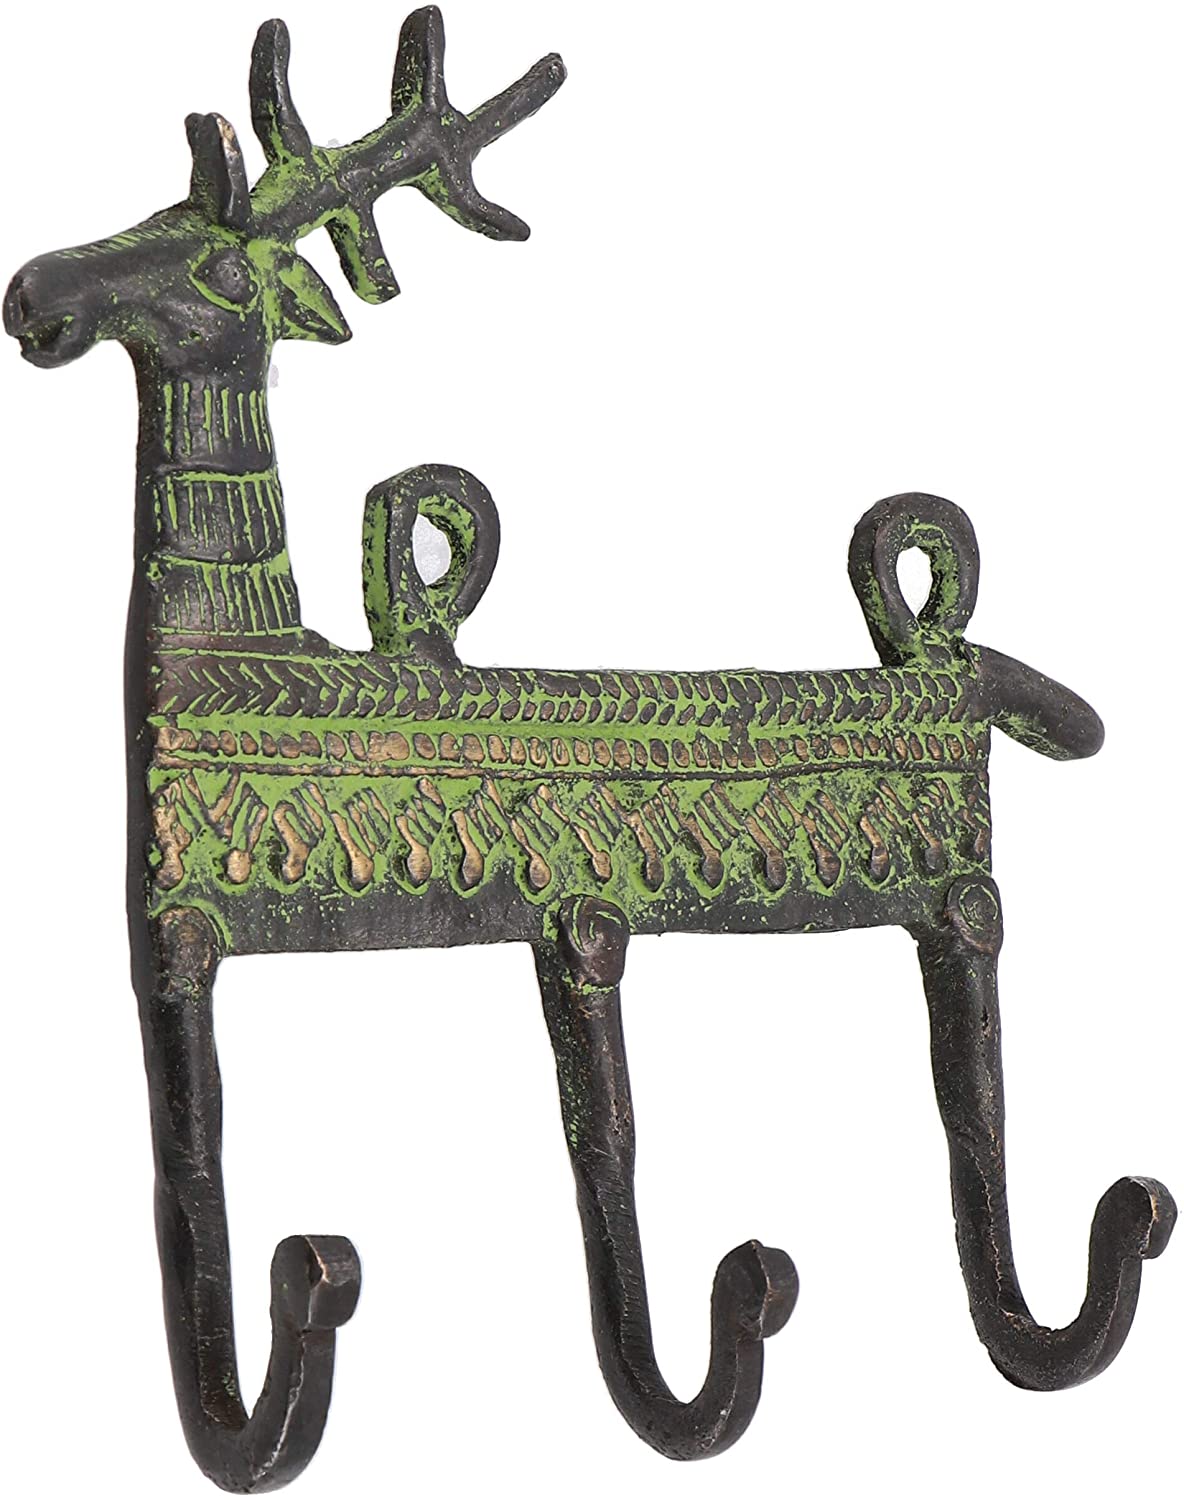 Guru-Shop GURU SHOP Filigree Decorated 3 Brass Wall Hooks, Wall Coat Rack, Key Holder with Engraving - Deer / Antique Green, 13 x 13 x 3.5 cm, Wall Hooks Made of Wood, Metal and Ceramic